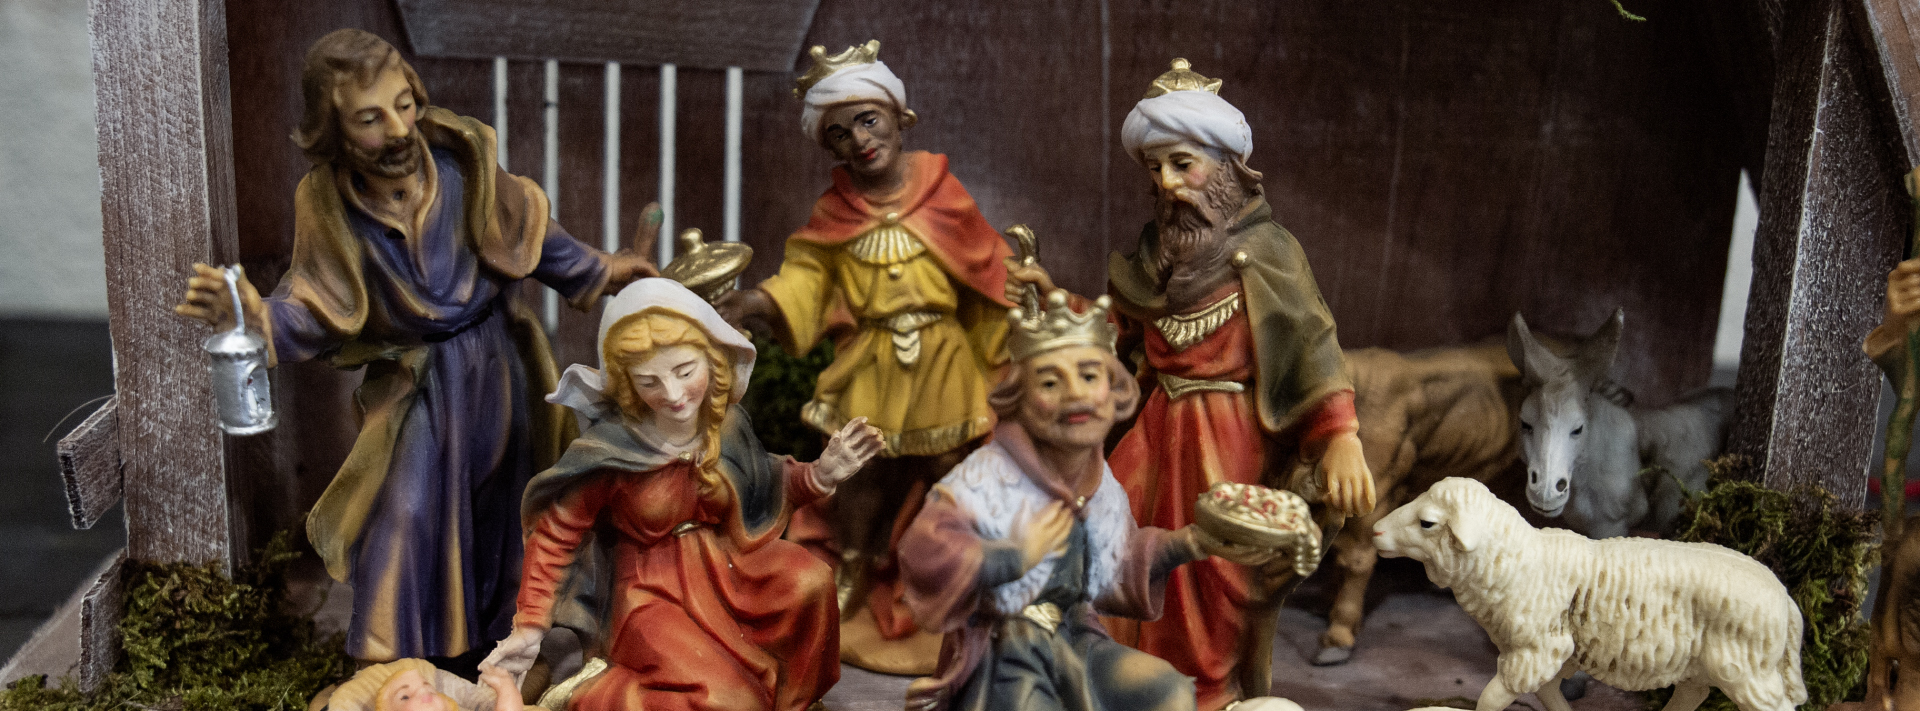 Resin Nativity figures